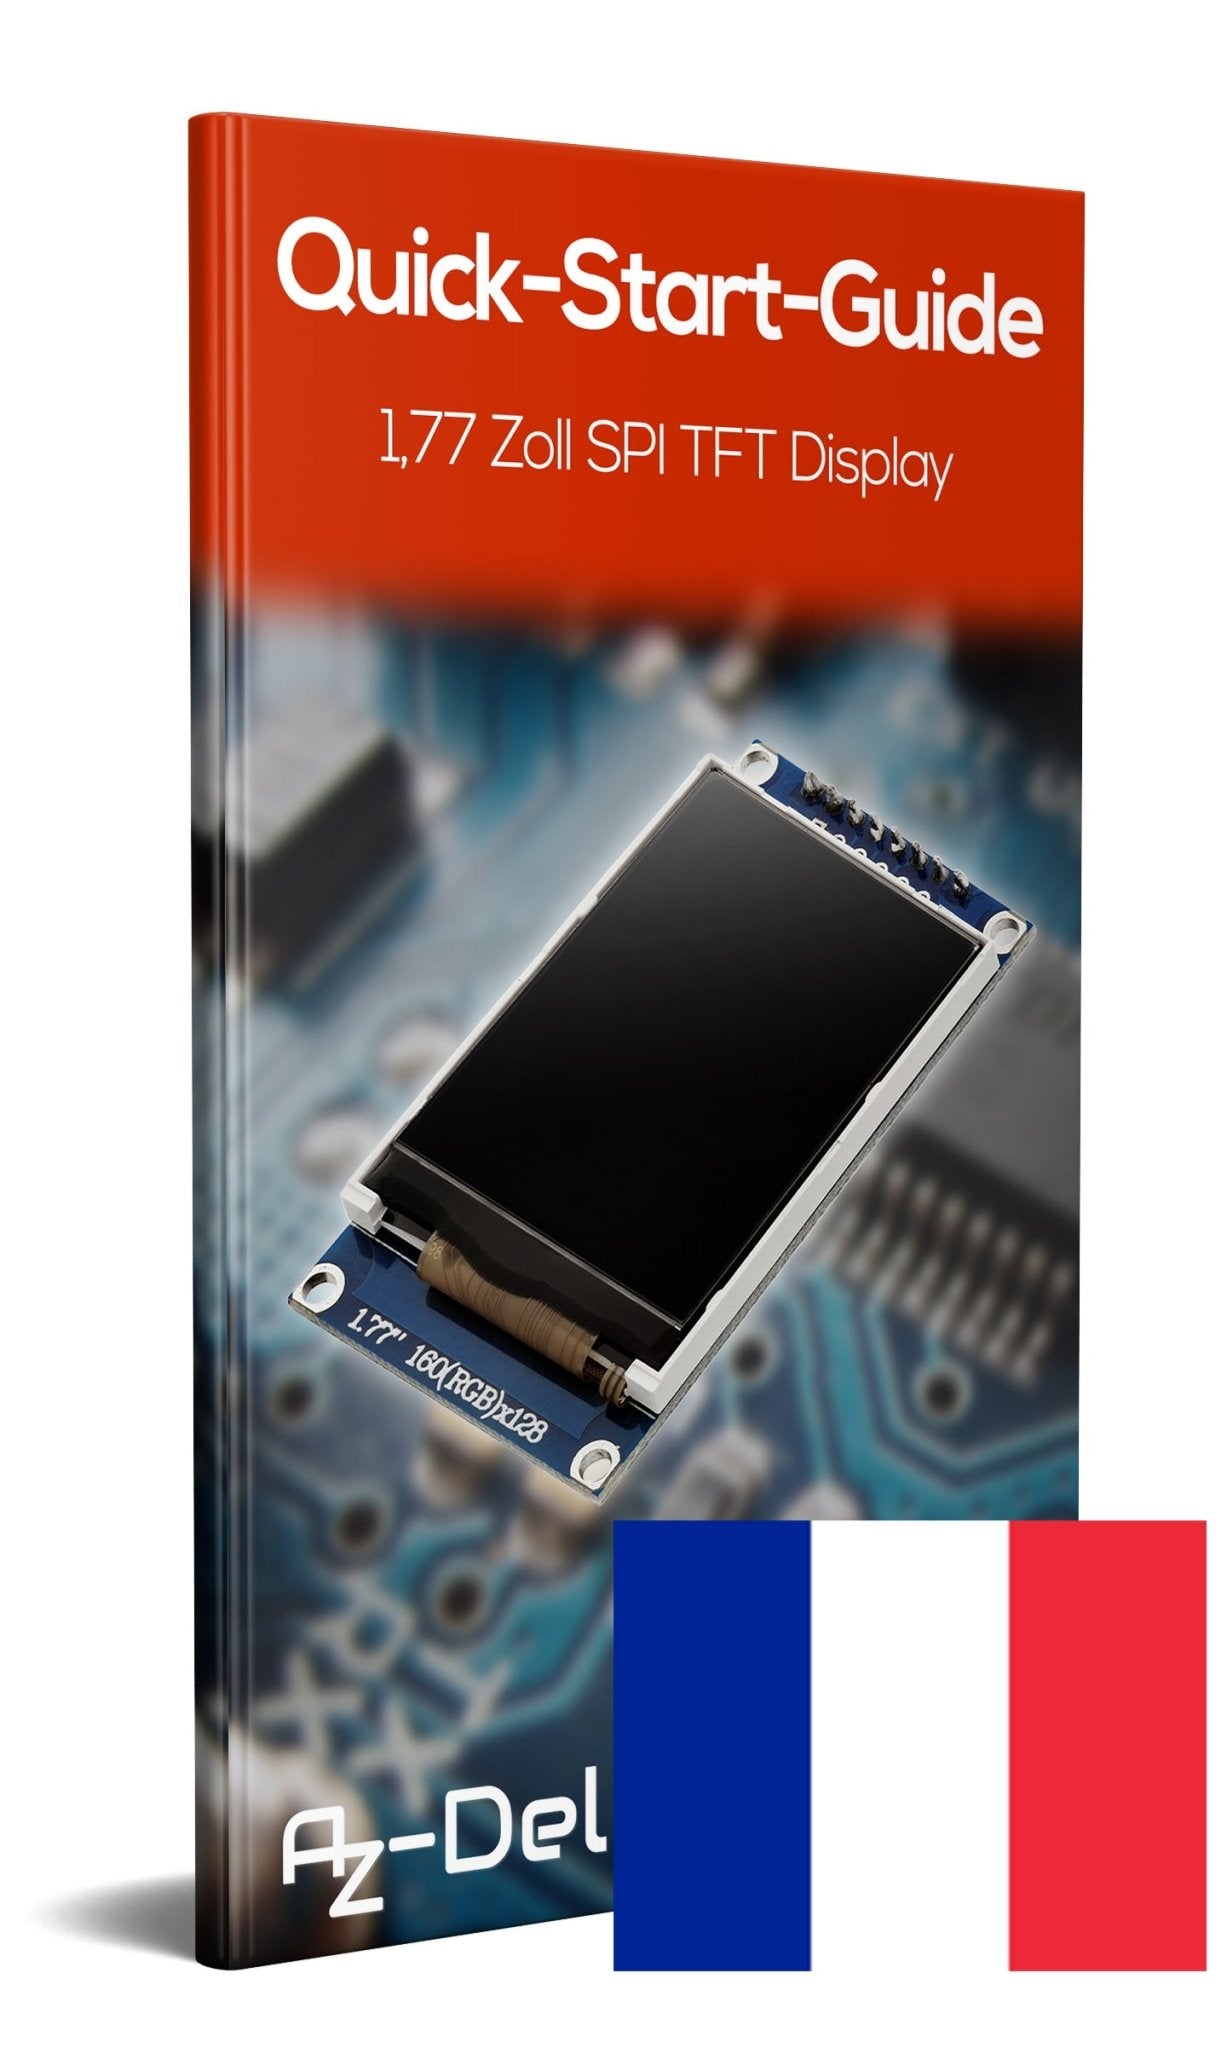 1.77 inch Spi TFT display and 128x160 pixels